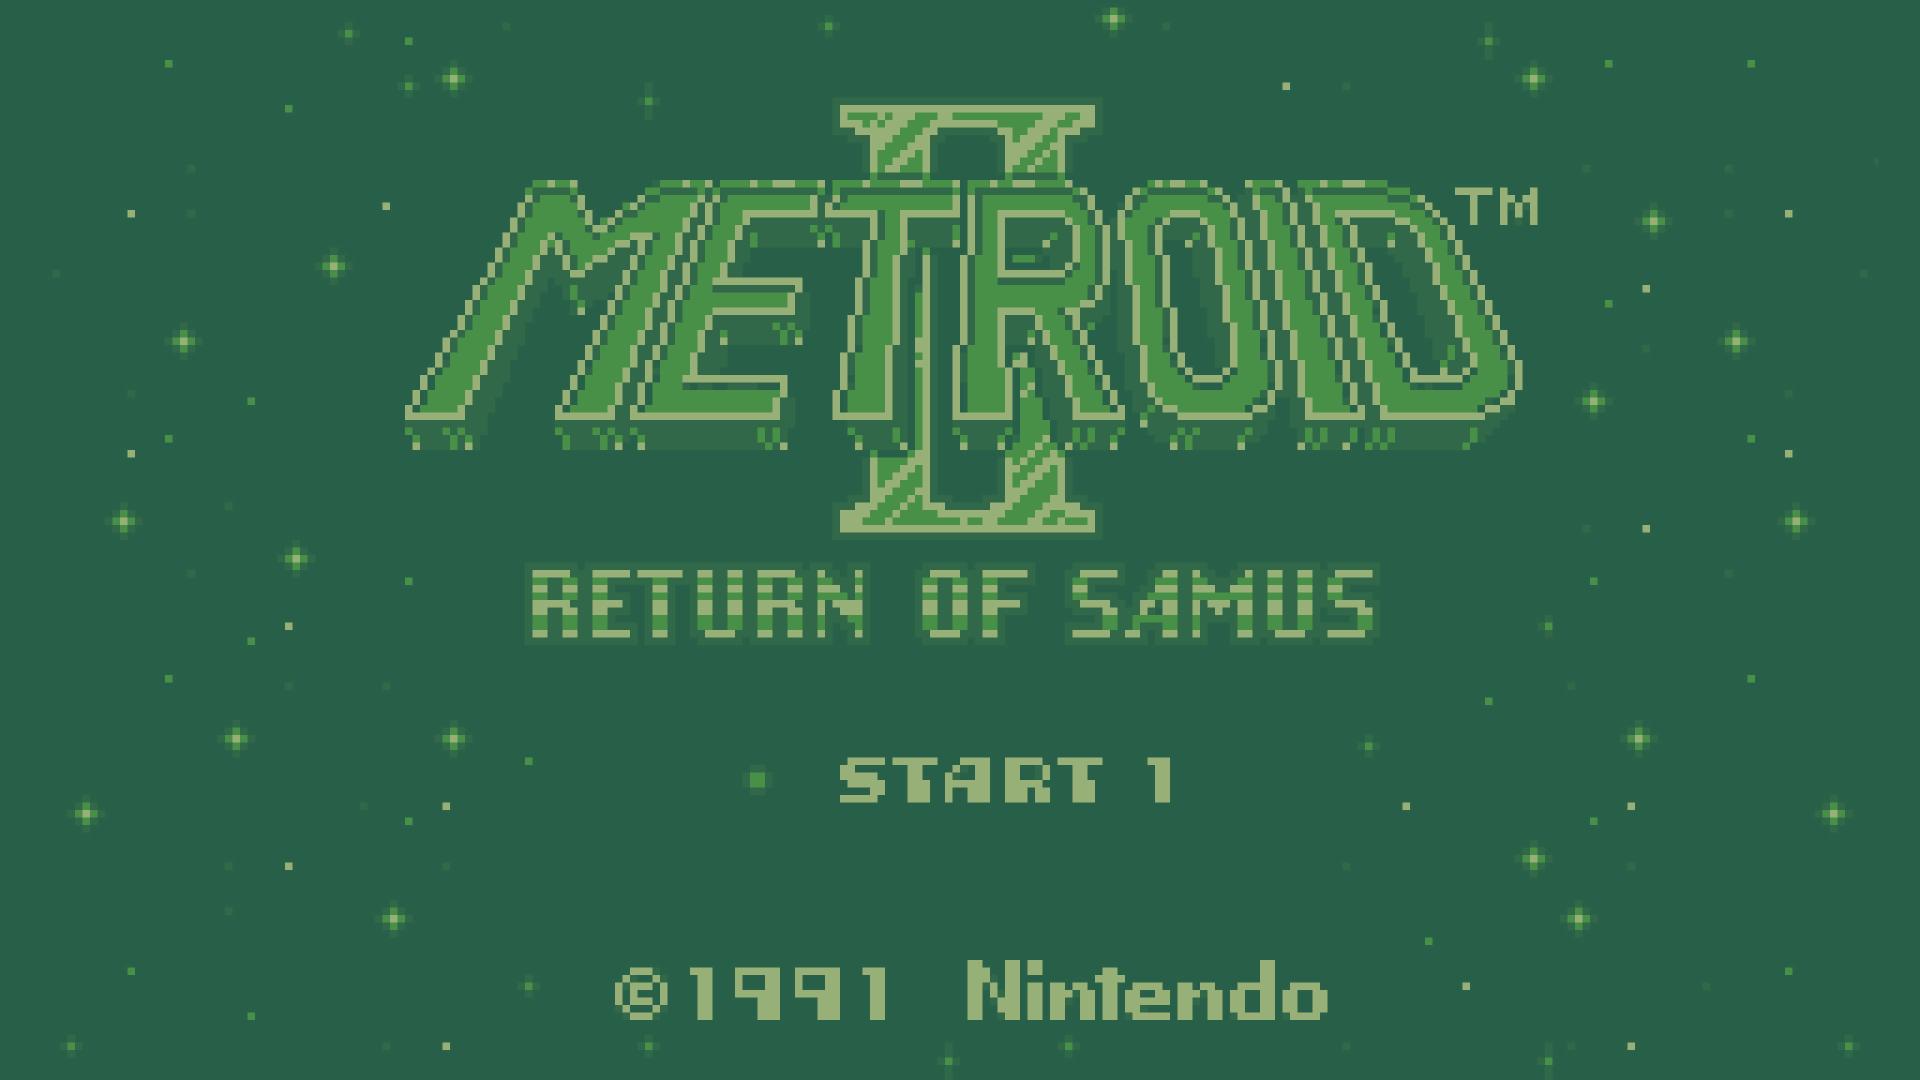 Metroid II Return Of Samus at 2048 x 2048 iPad size wallpapers HD quality